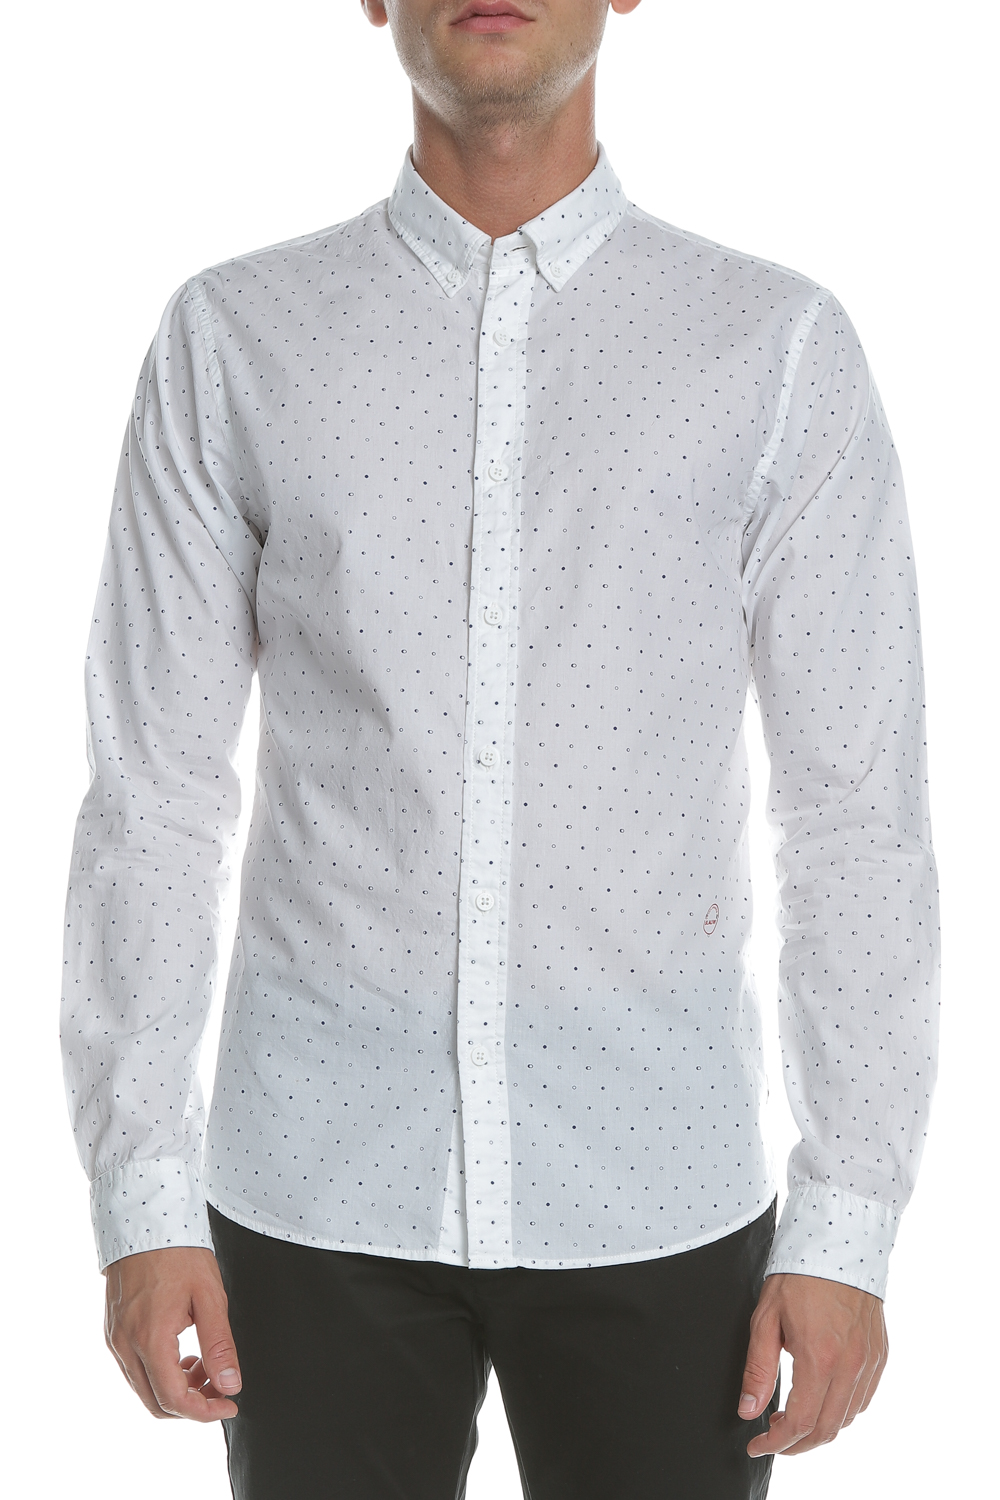 SCOTCH & SODA - Ανδρικό μακρυμάνικο πουκάμισο SCOTCH & SODA λευκό Ανδρικά/Ρούχα/Πουκάμισα/Μακρυμάνικα